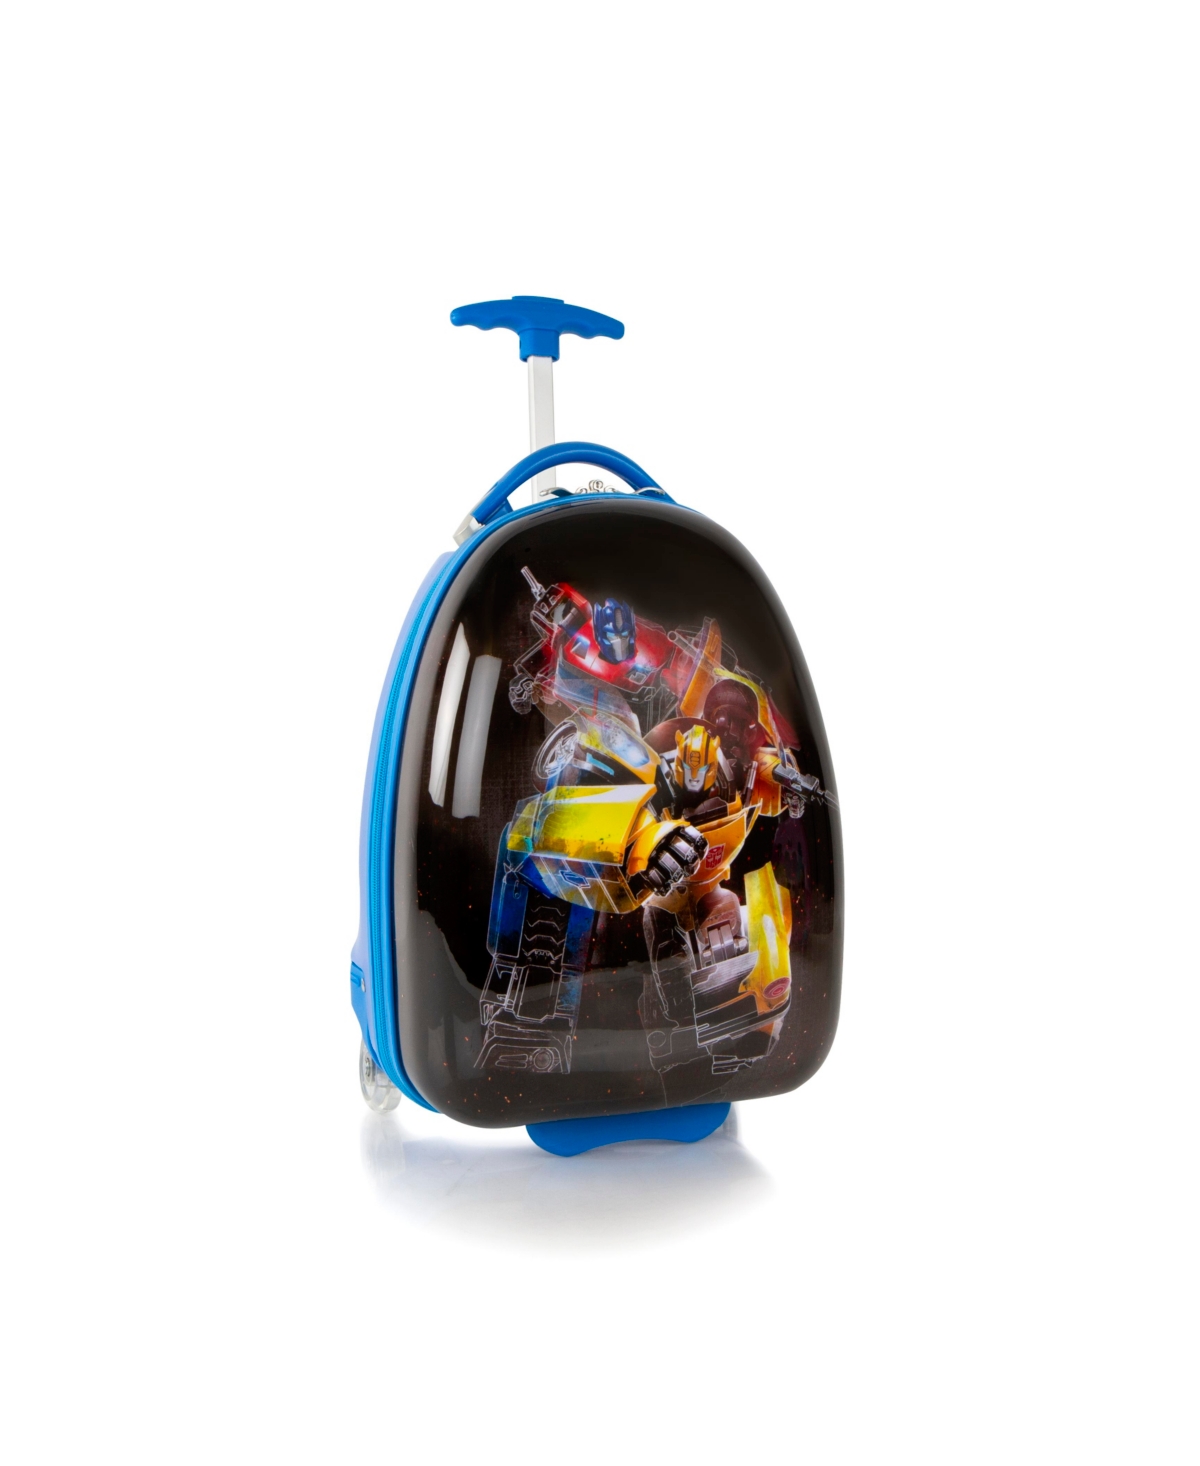 Hasbro 18" Transformers Egg Shape Lightweight Carry-On Luggage - Multi